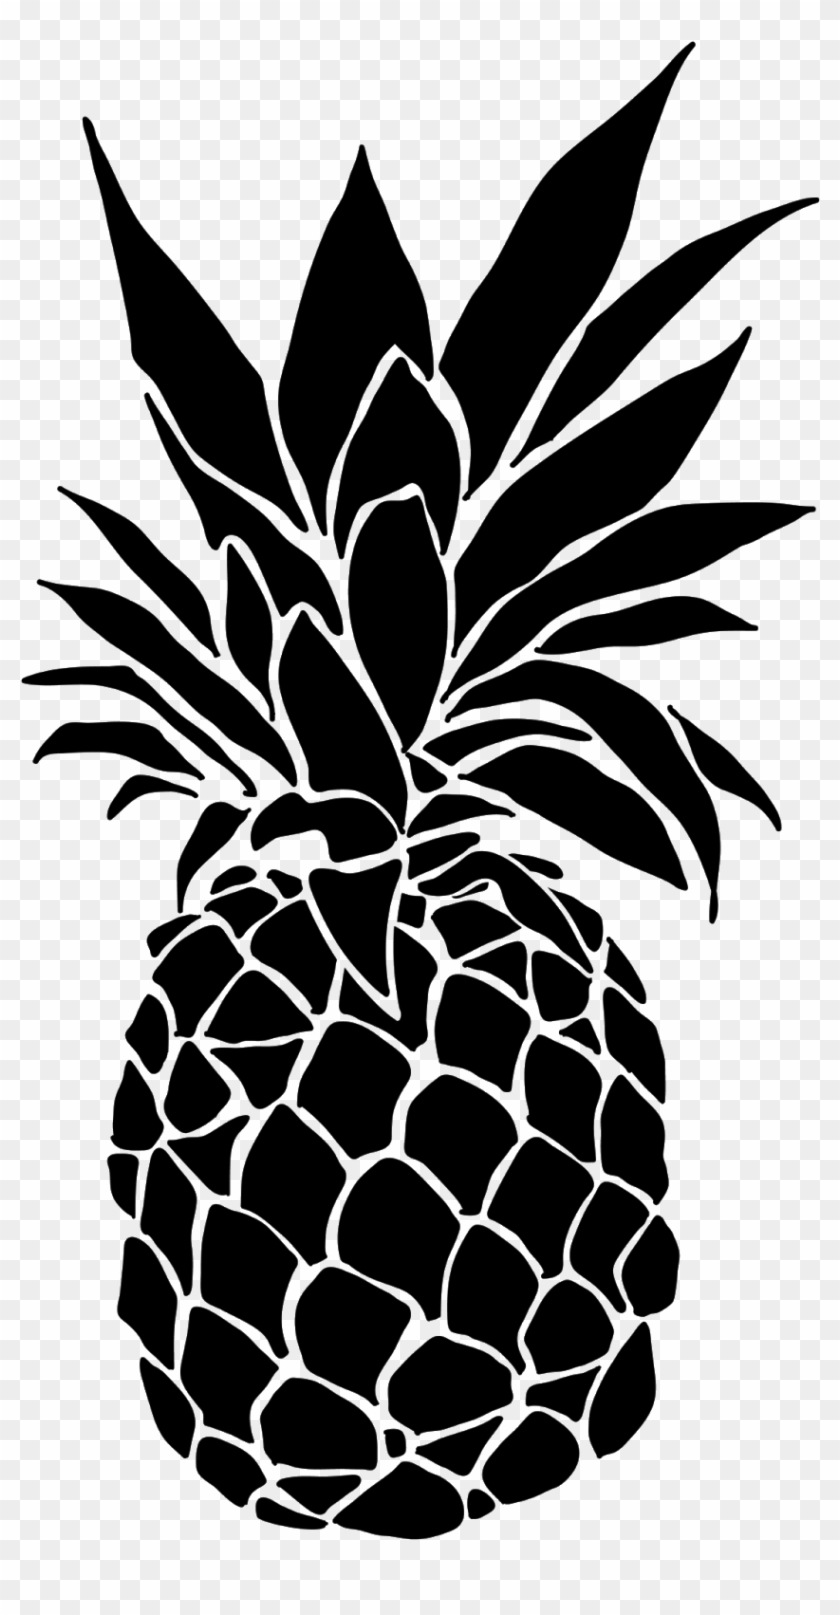 Pineapple Fruit Illustration Clip Art Image - Rose Gold Pineapple Iphone - Png Download #2305149